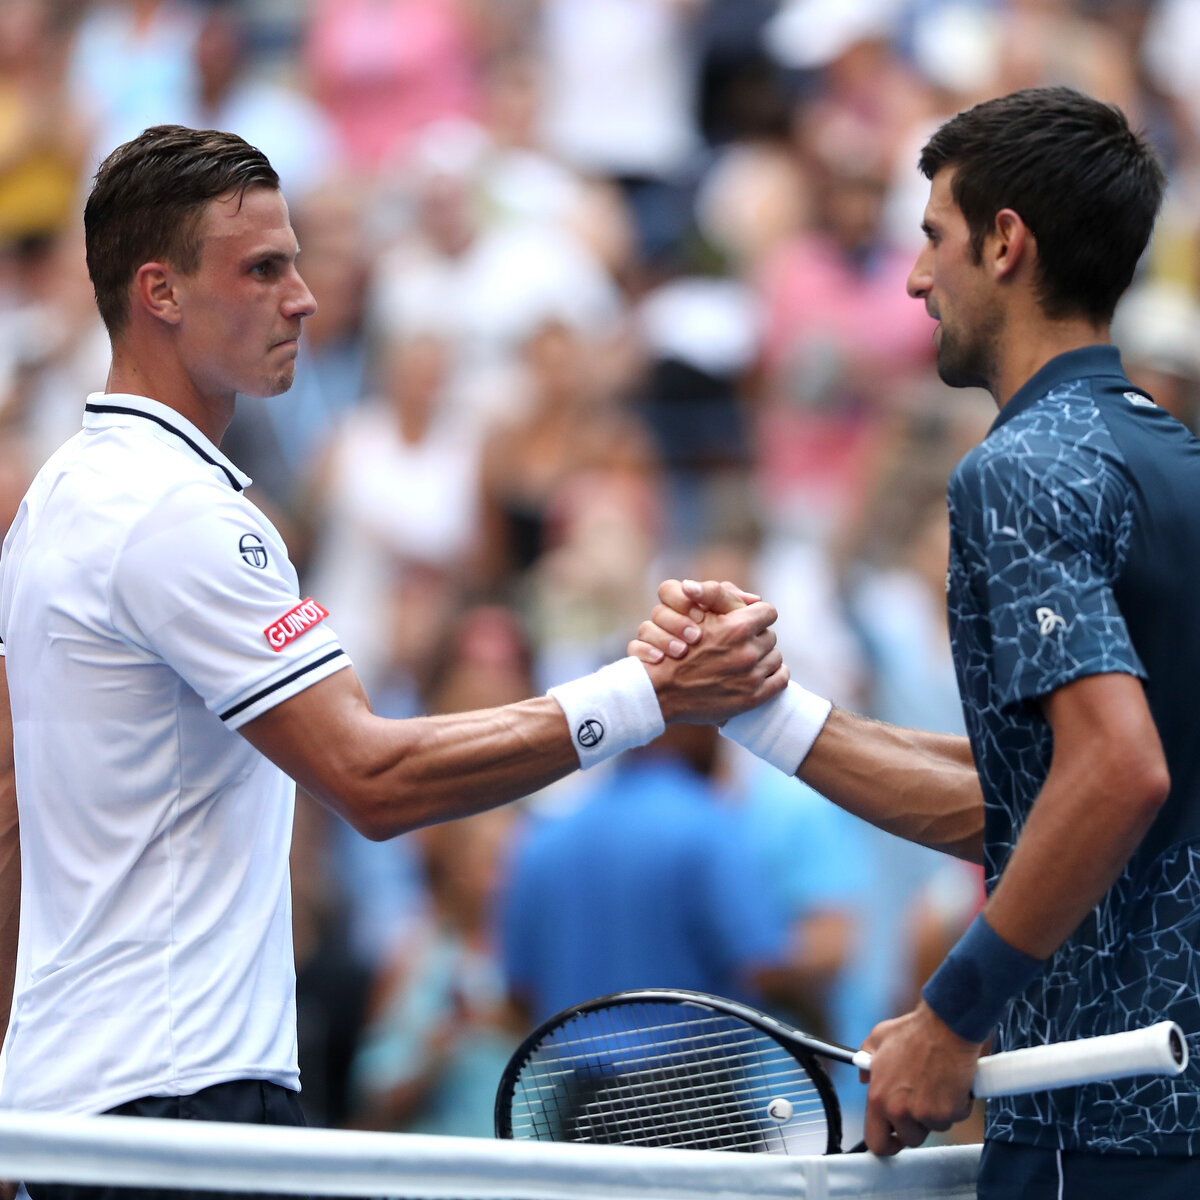 Wimbledon 2021 live Novak Djokovic vs